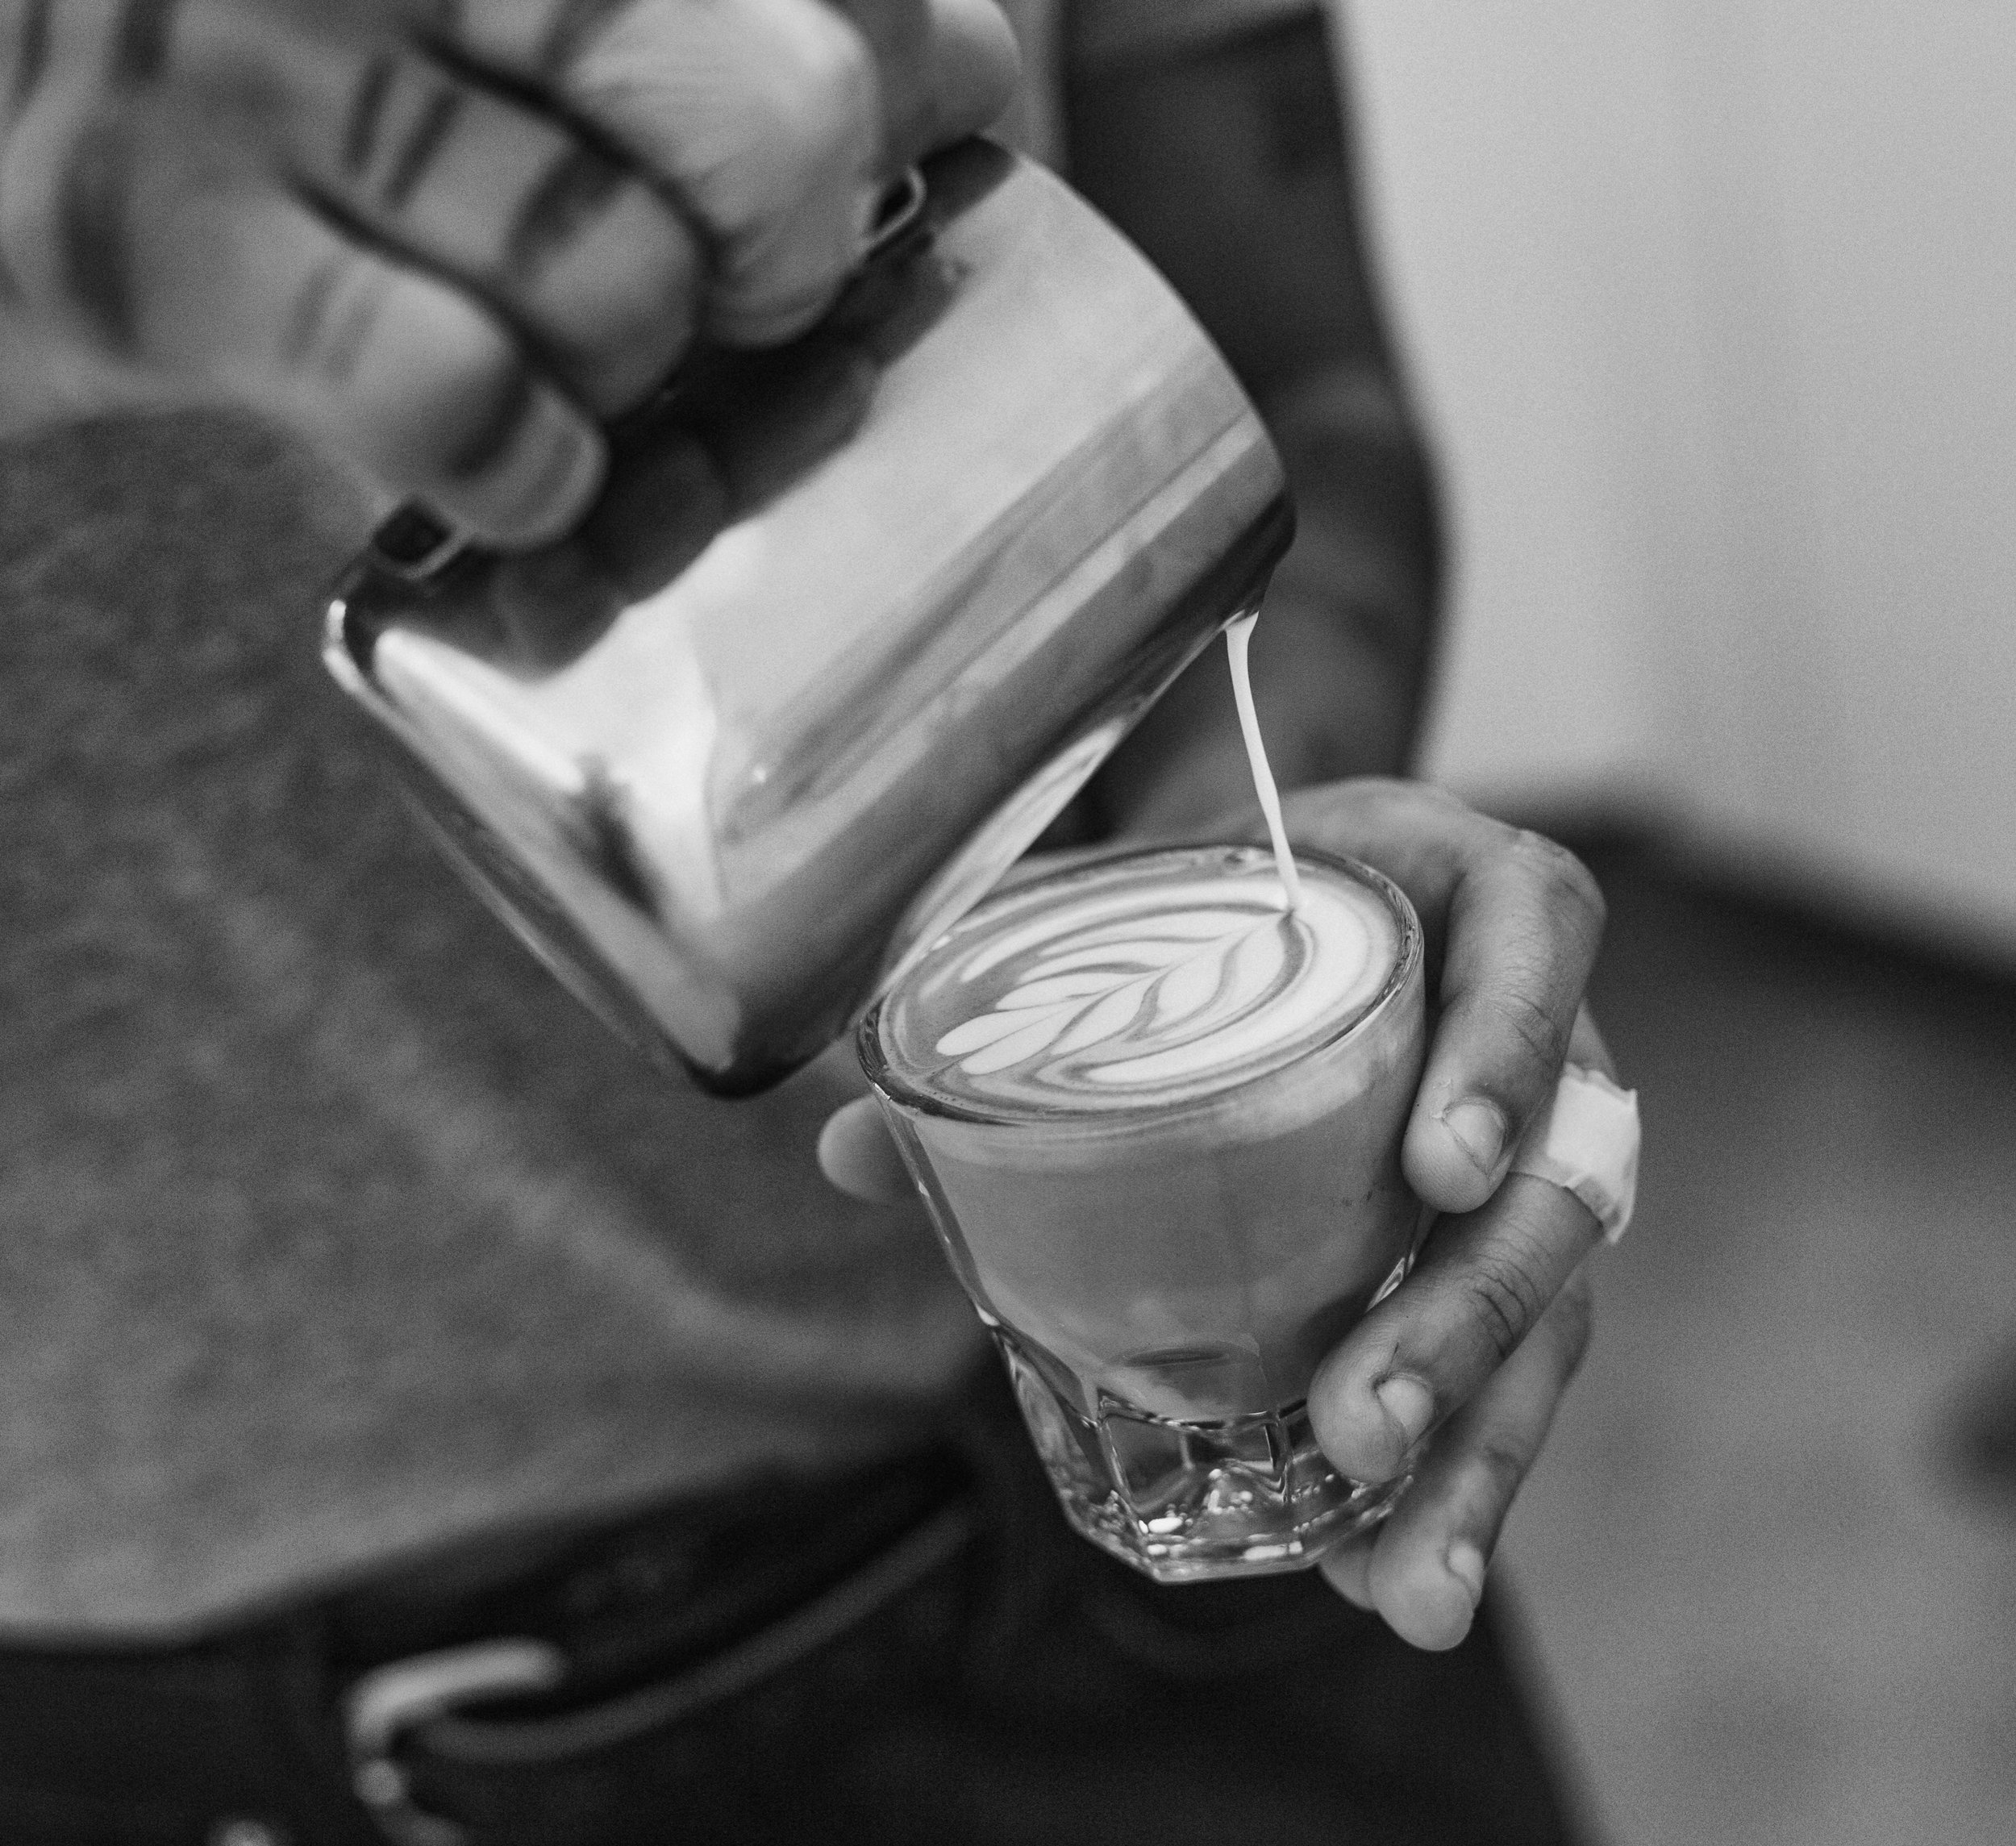 A barista pouring latte art into a cortado glass, possibly using non-dairy milk.